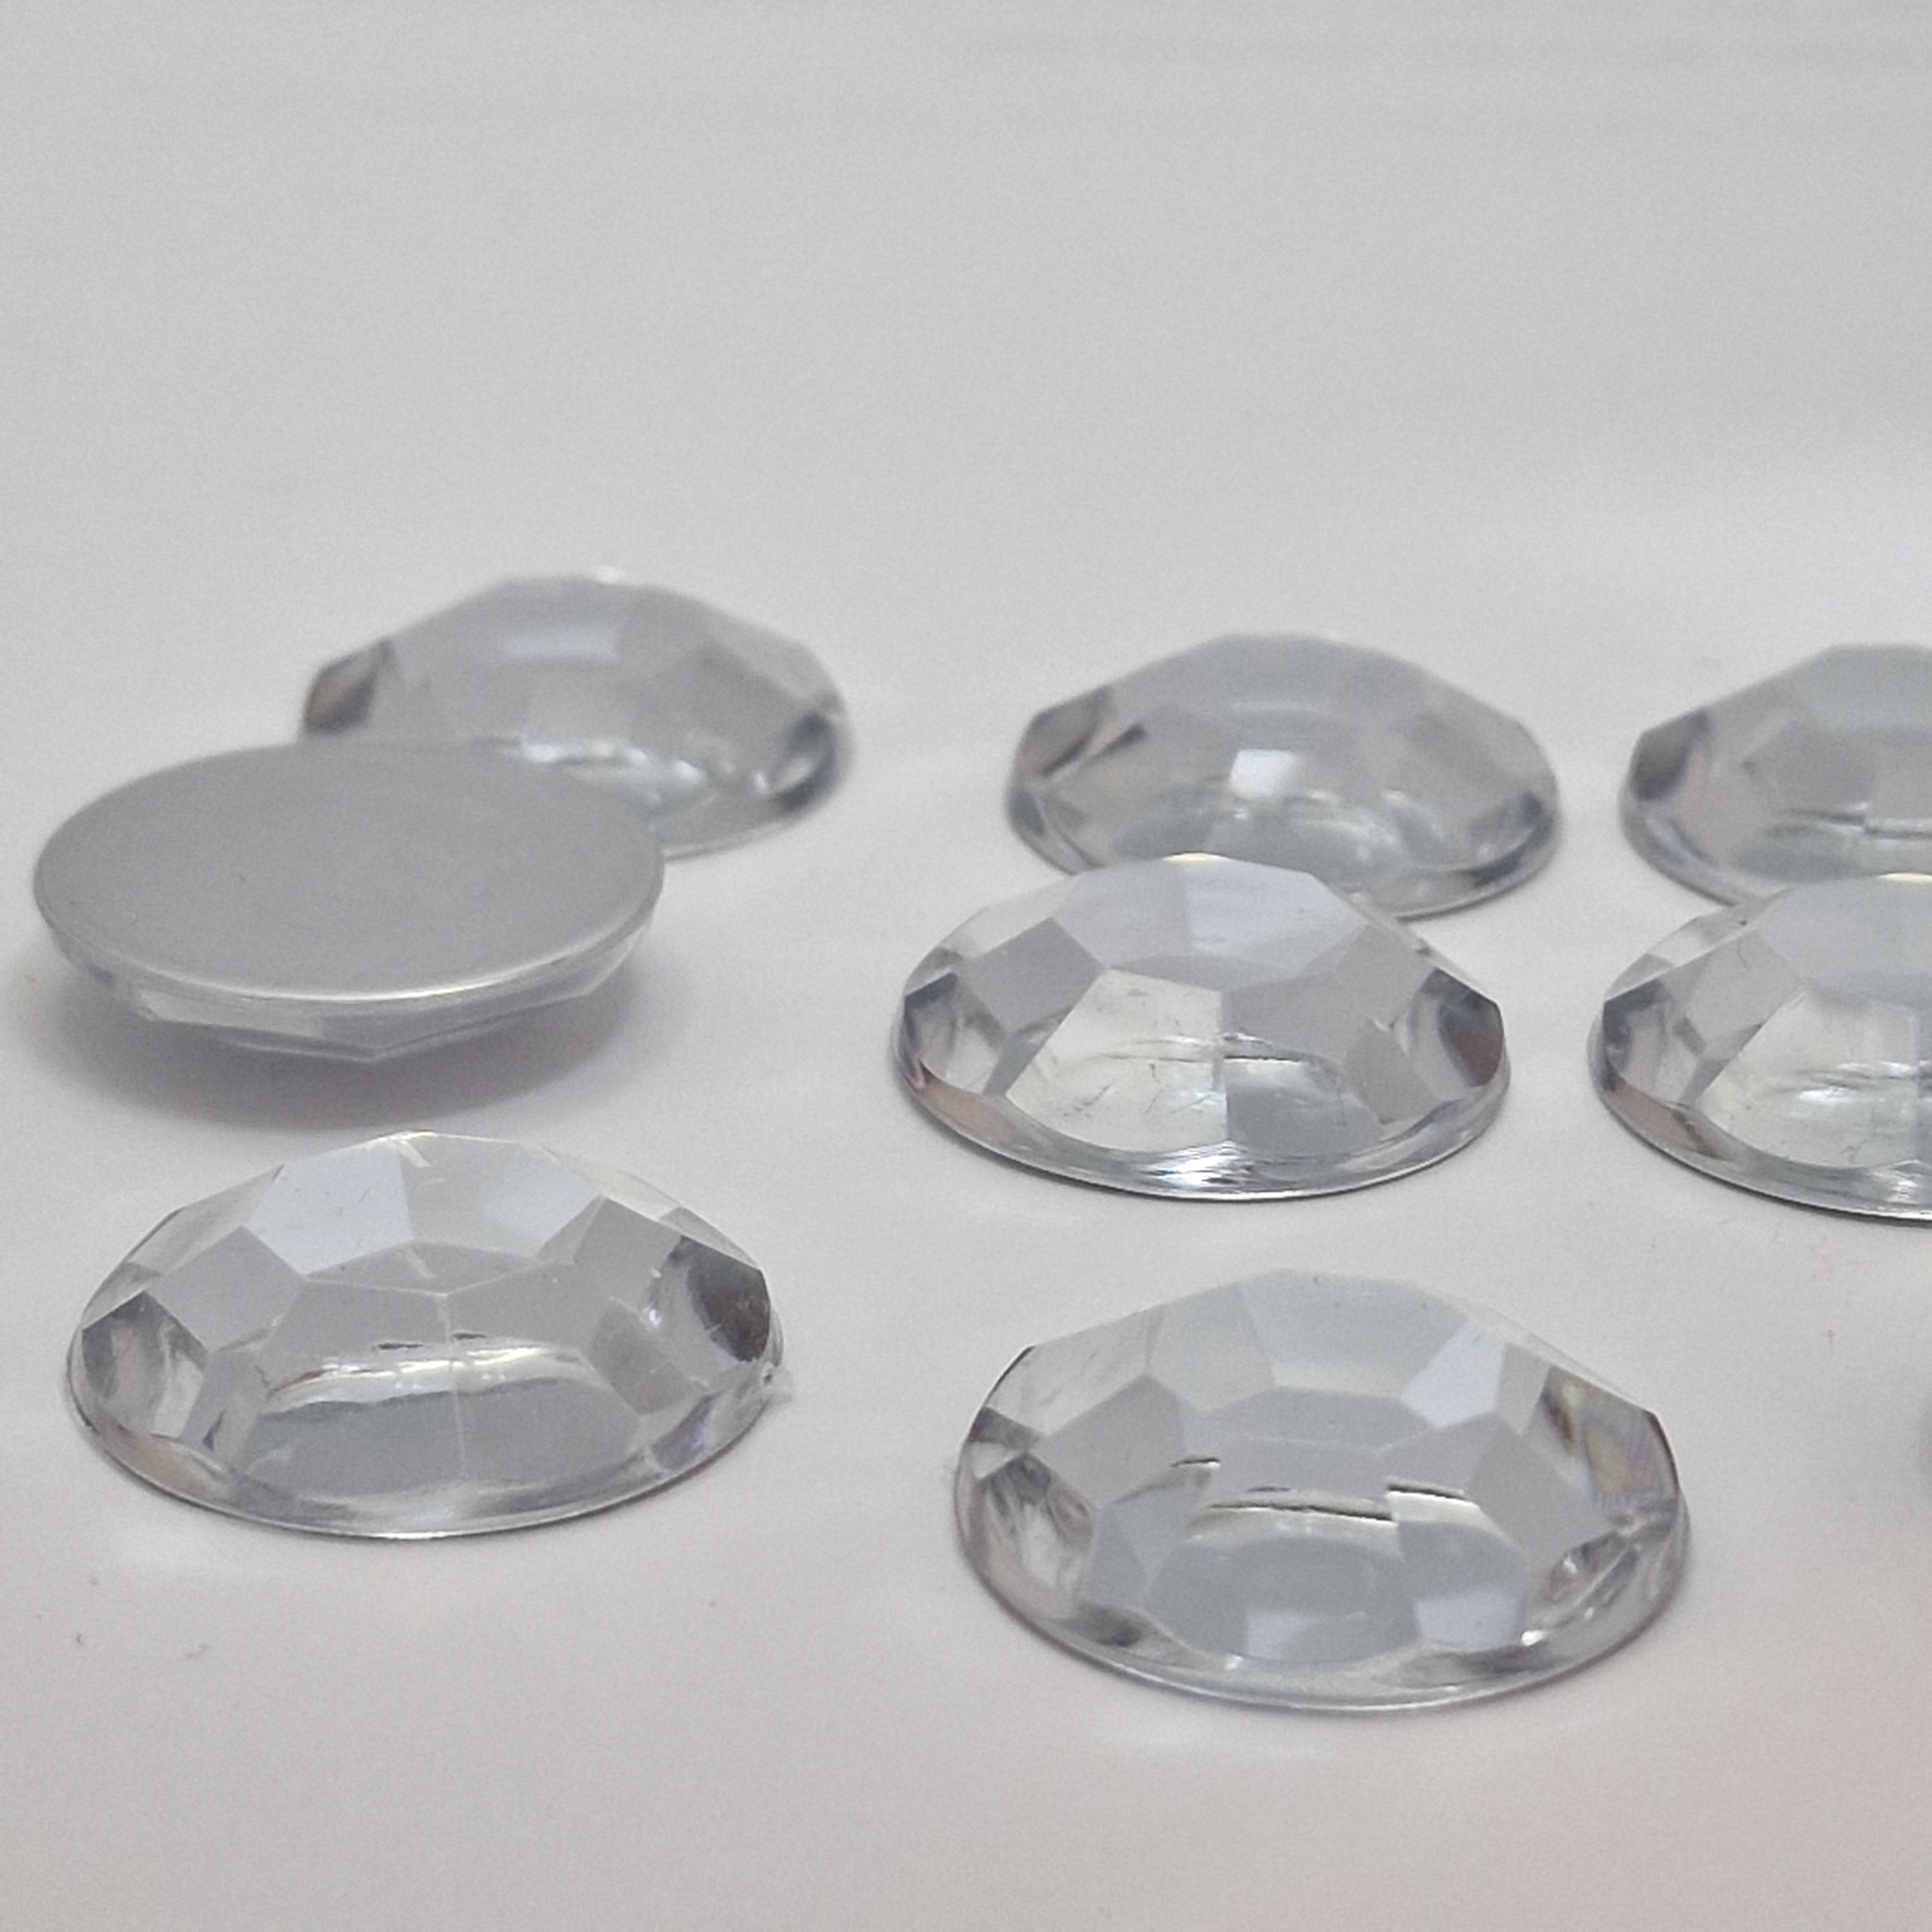 MajorCrafts 20pcs 25mm Crystal Clear Flat Back 8 Facets Large Round High-Grade Acrylic Rhinestones